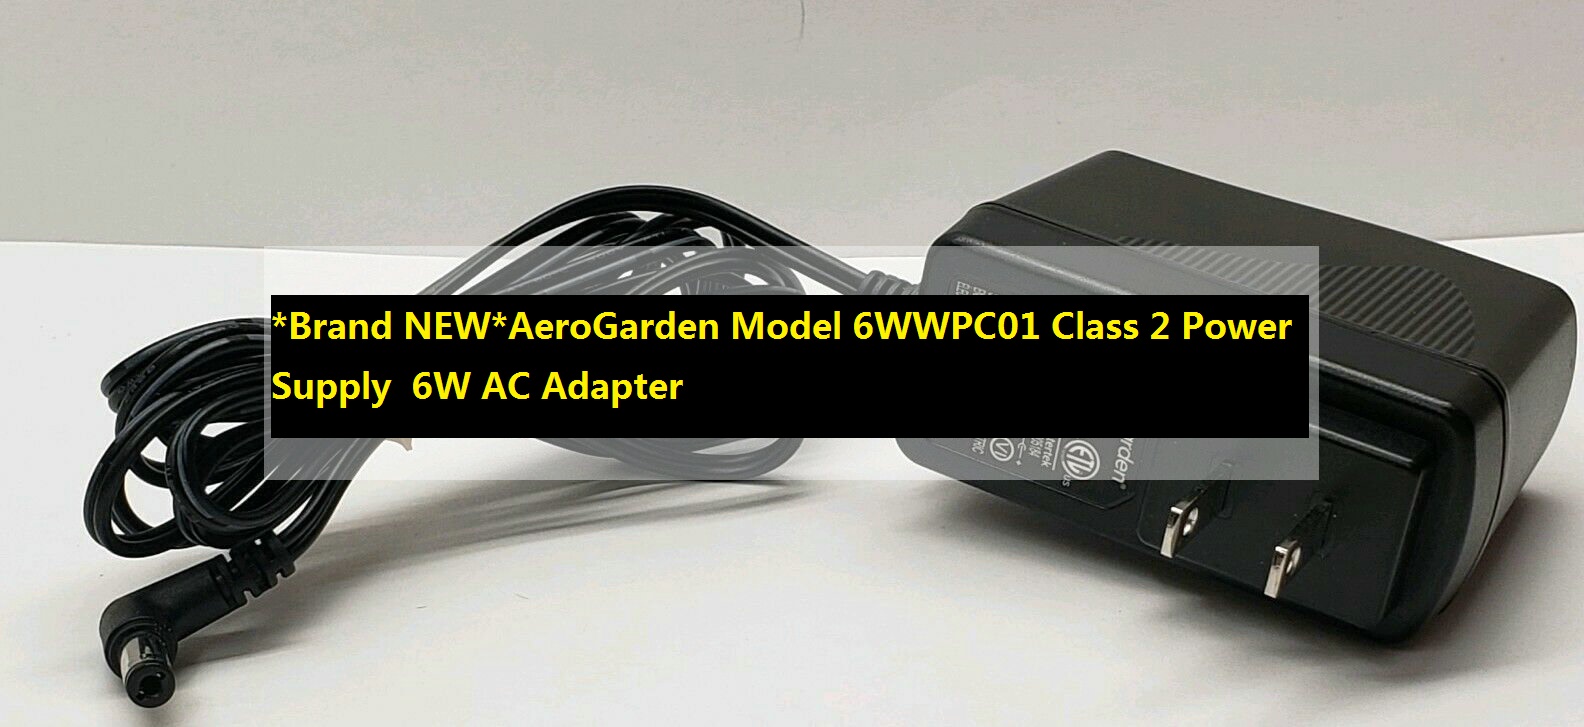 *Brand NEW*AeroGarden Replacement Parts ADAPTER Model 6WWPC01 Class 2 Power Supply